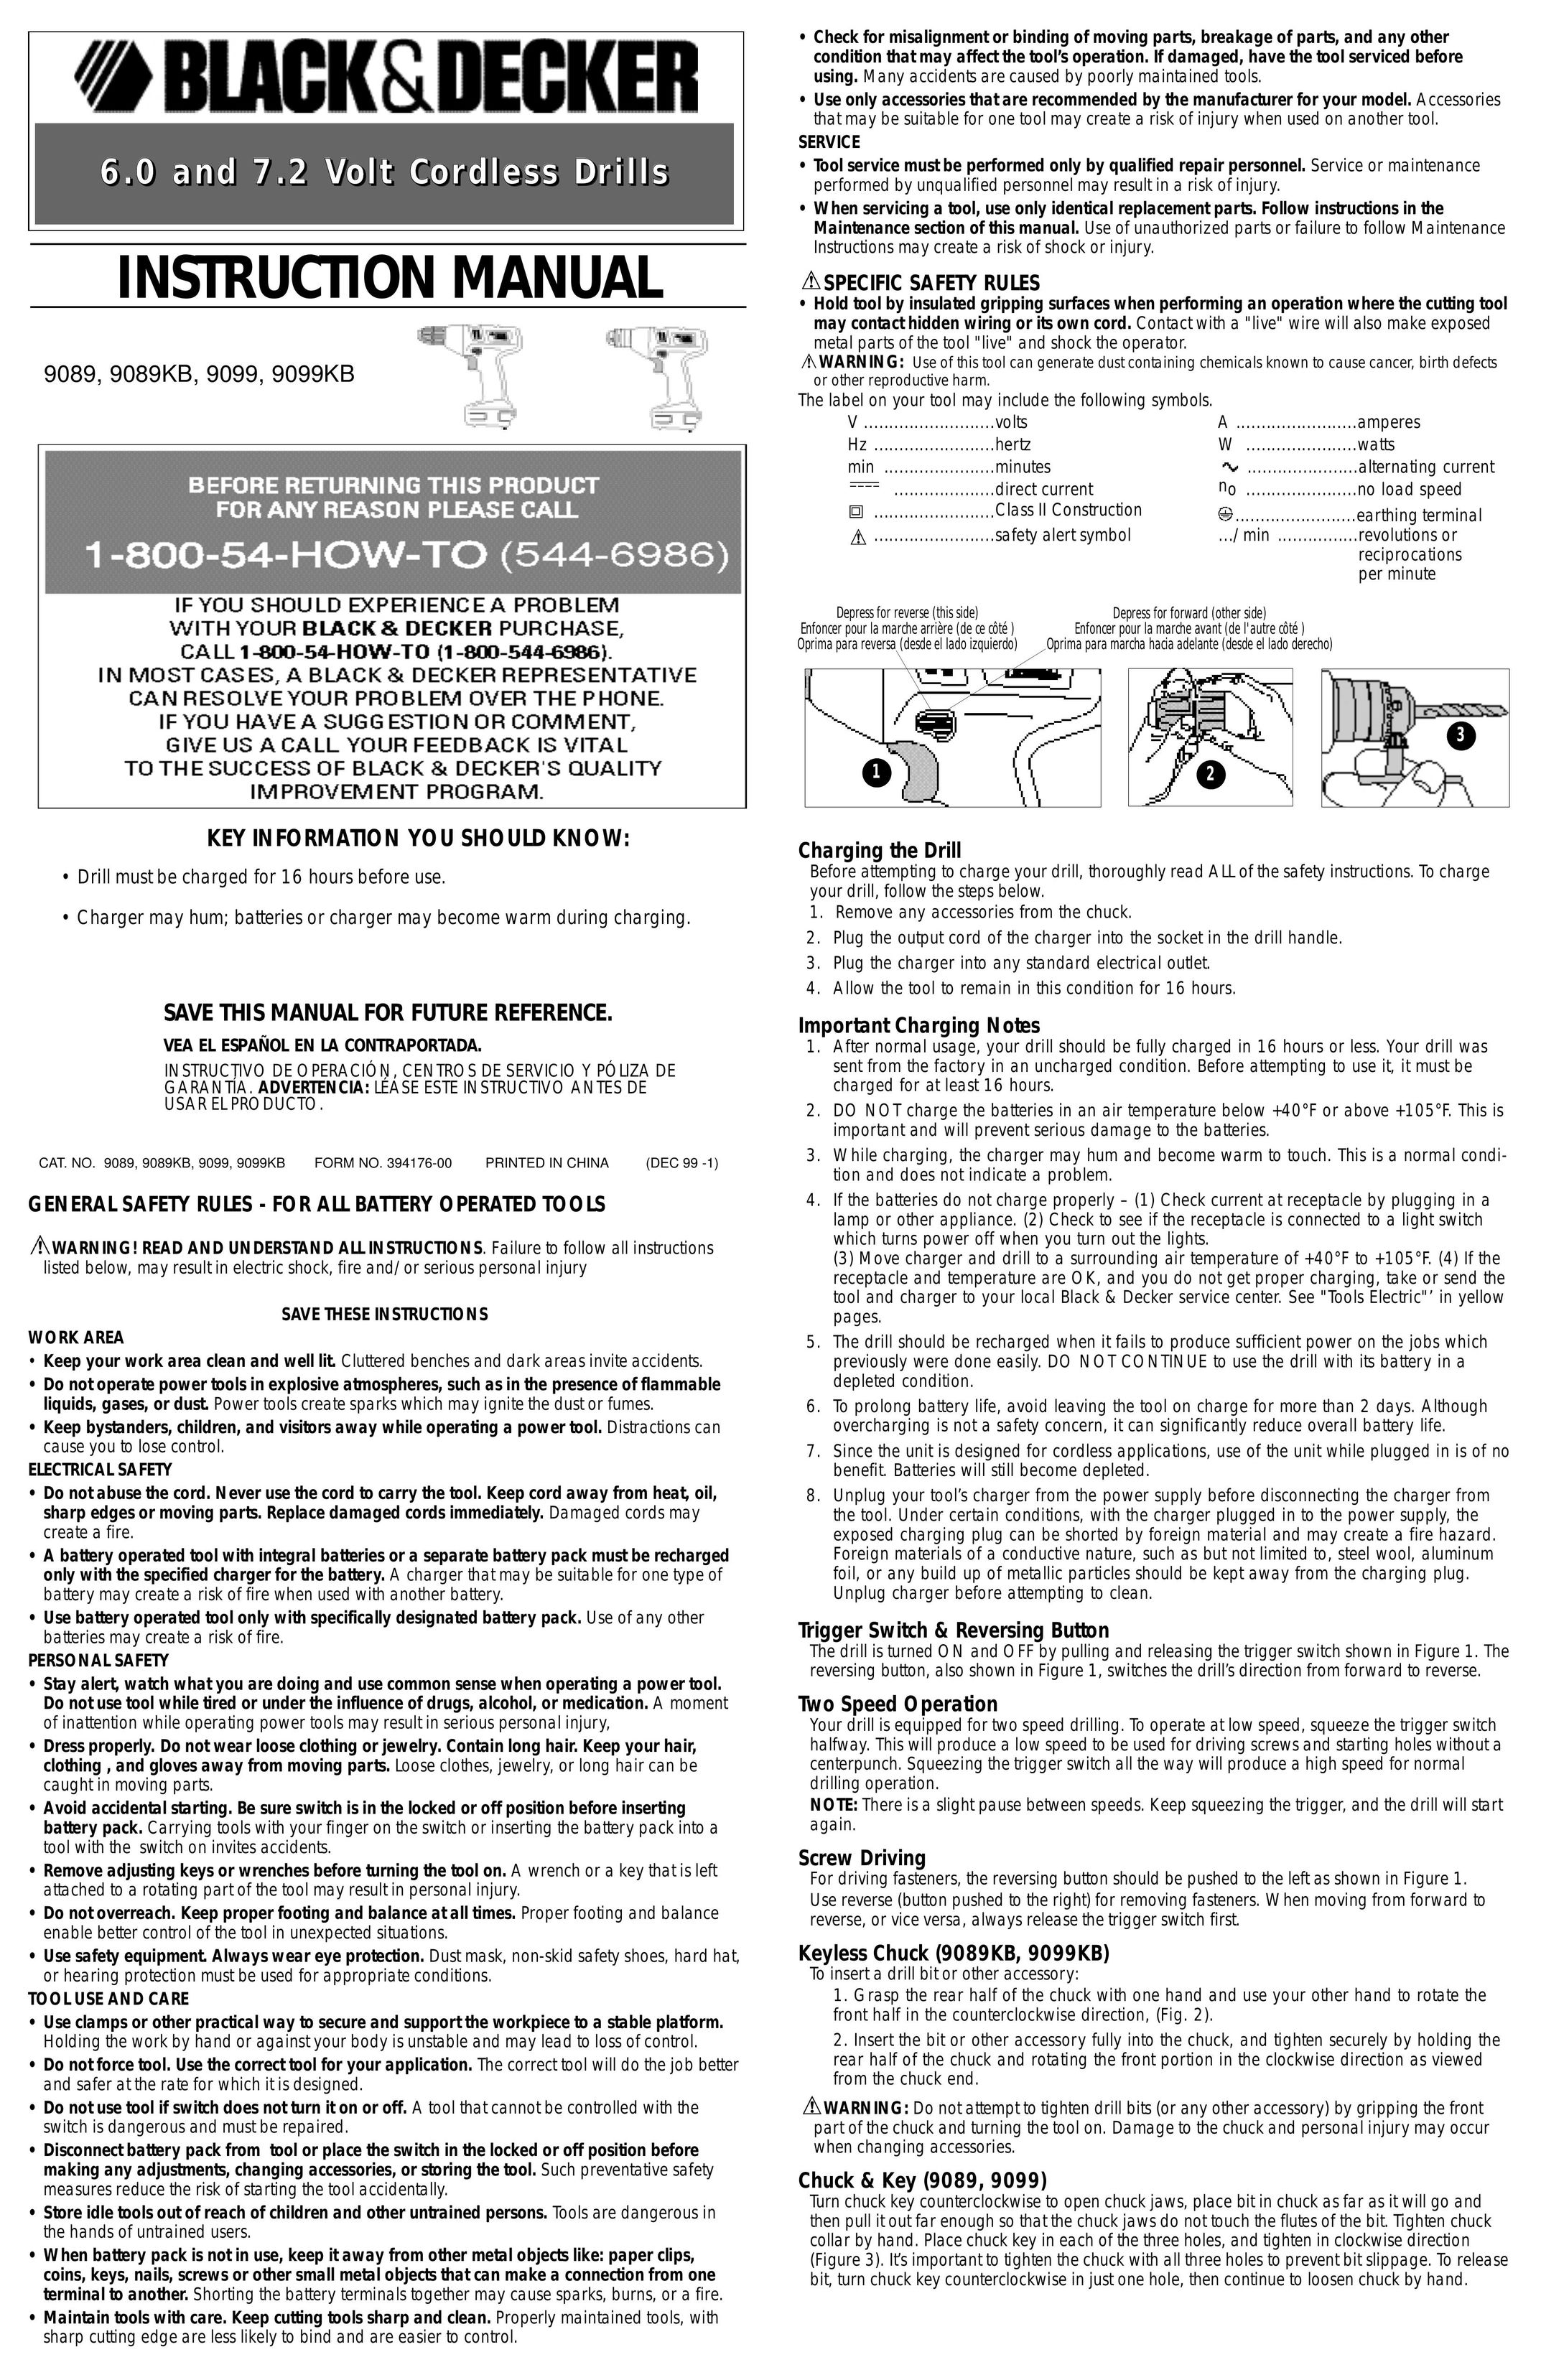 Black & Decker 9099KC Cordless Drill User Manual